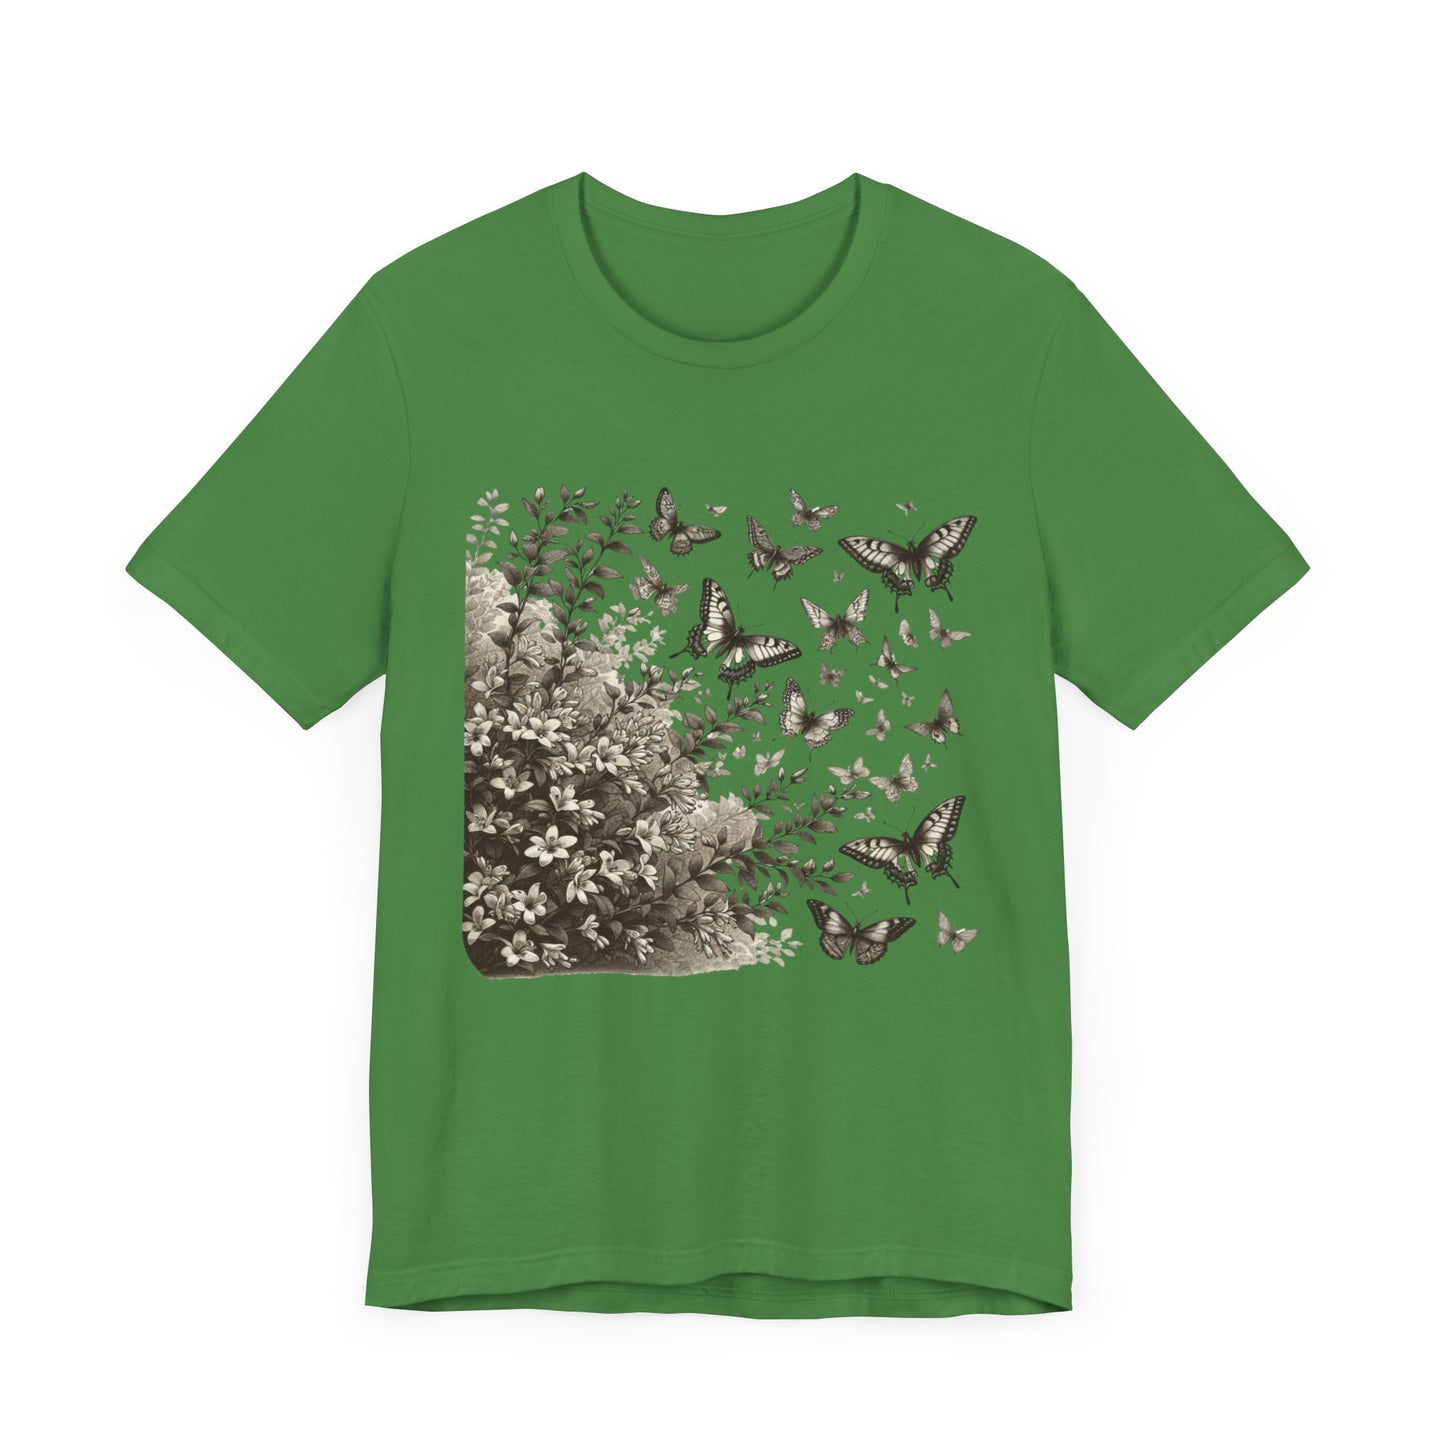 Butterflies and Abelia Trees T-shirt - Tortuna